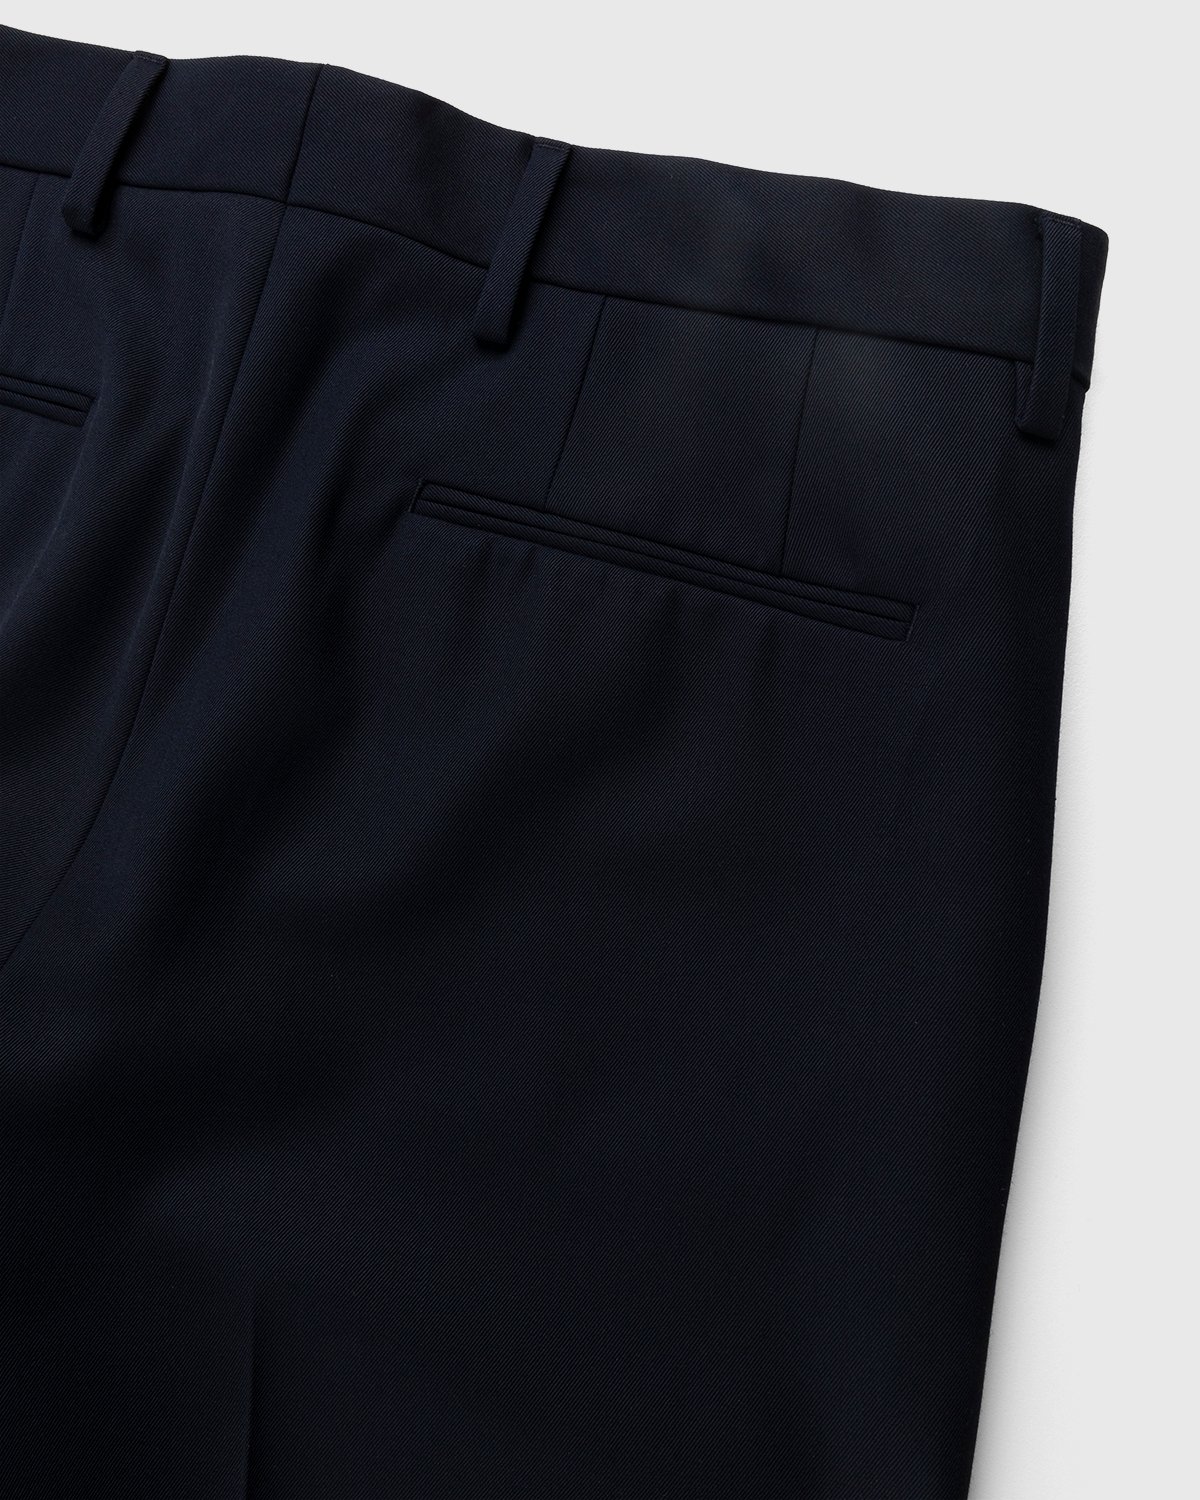 Dries van Noten - Prescott Double Layer Shorts Navy - Clothing - Blue - Image 3